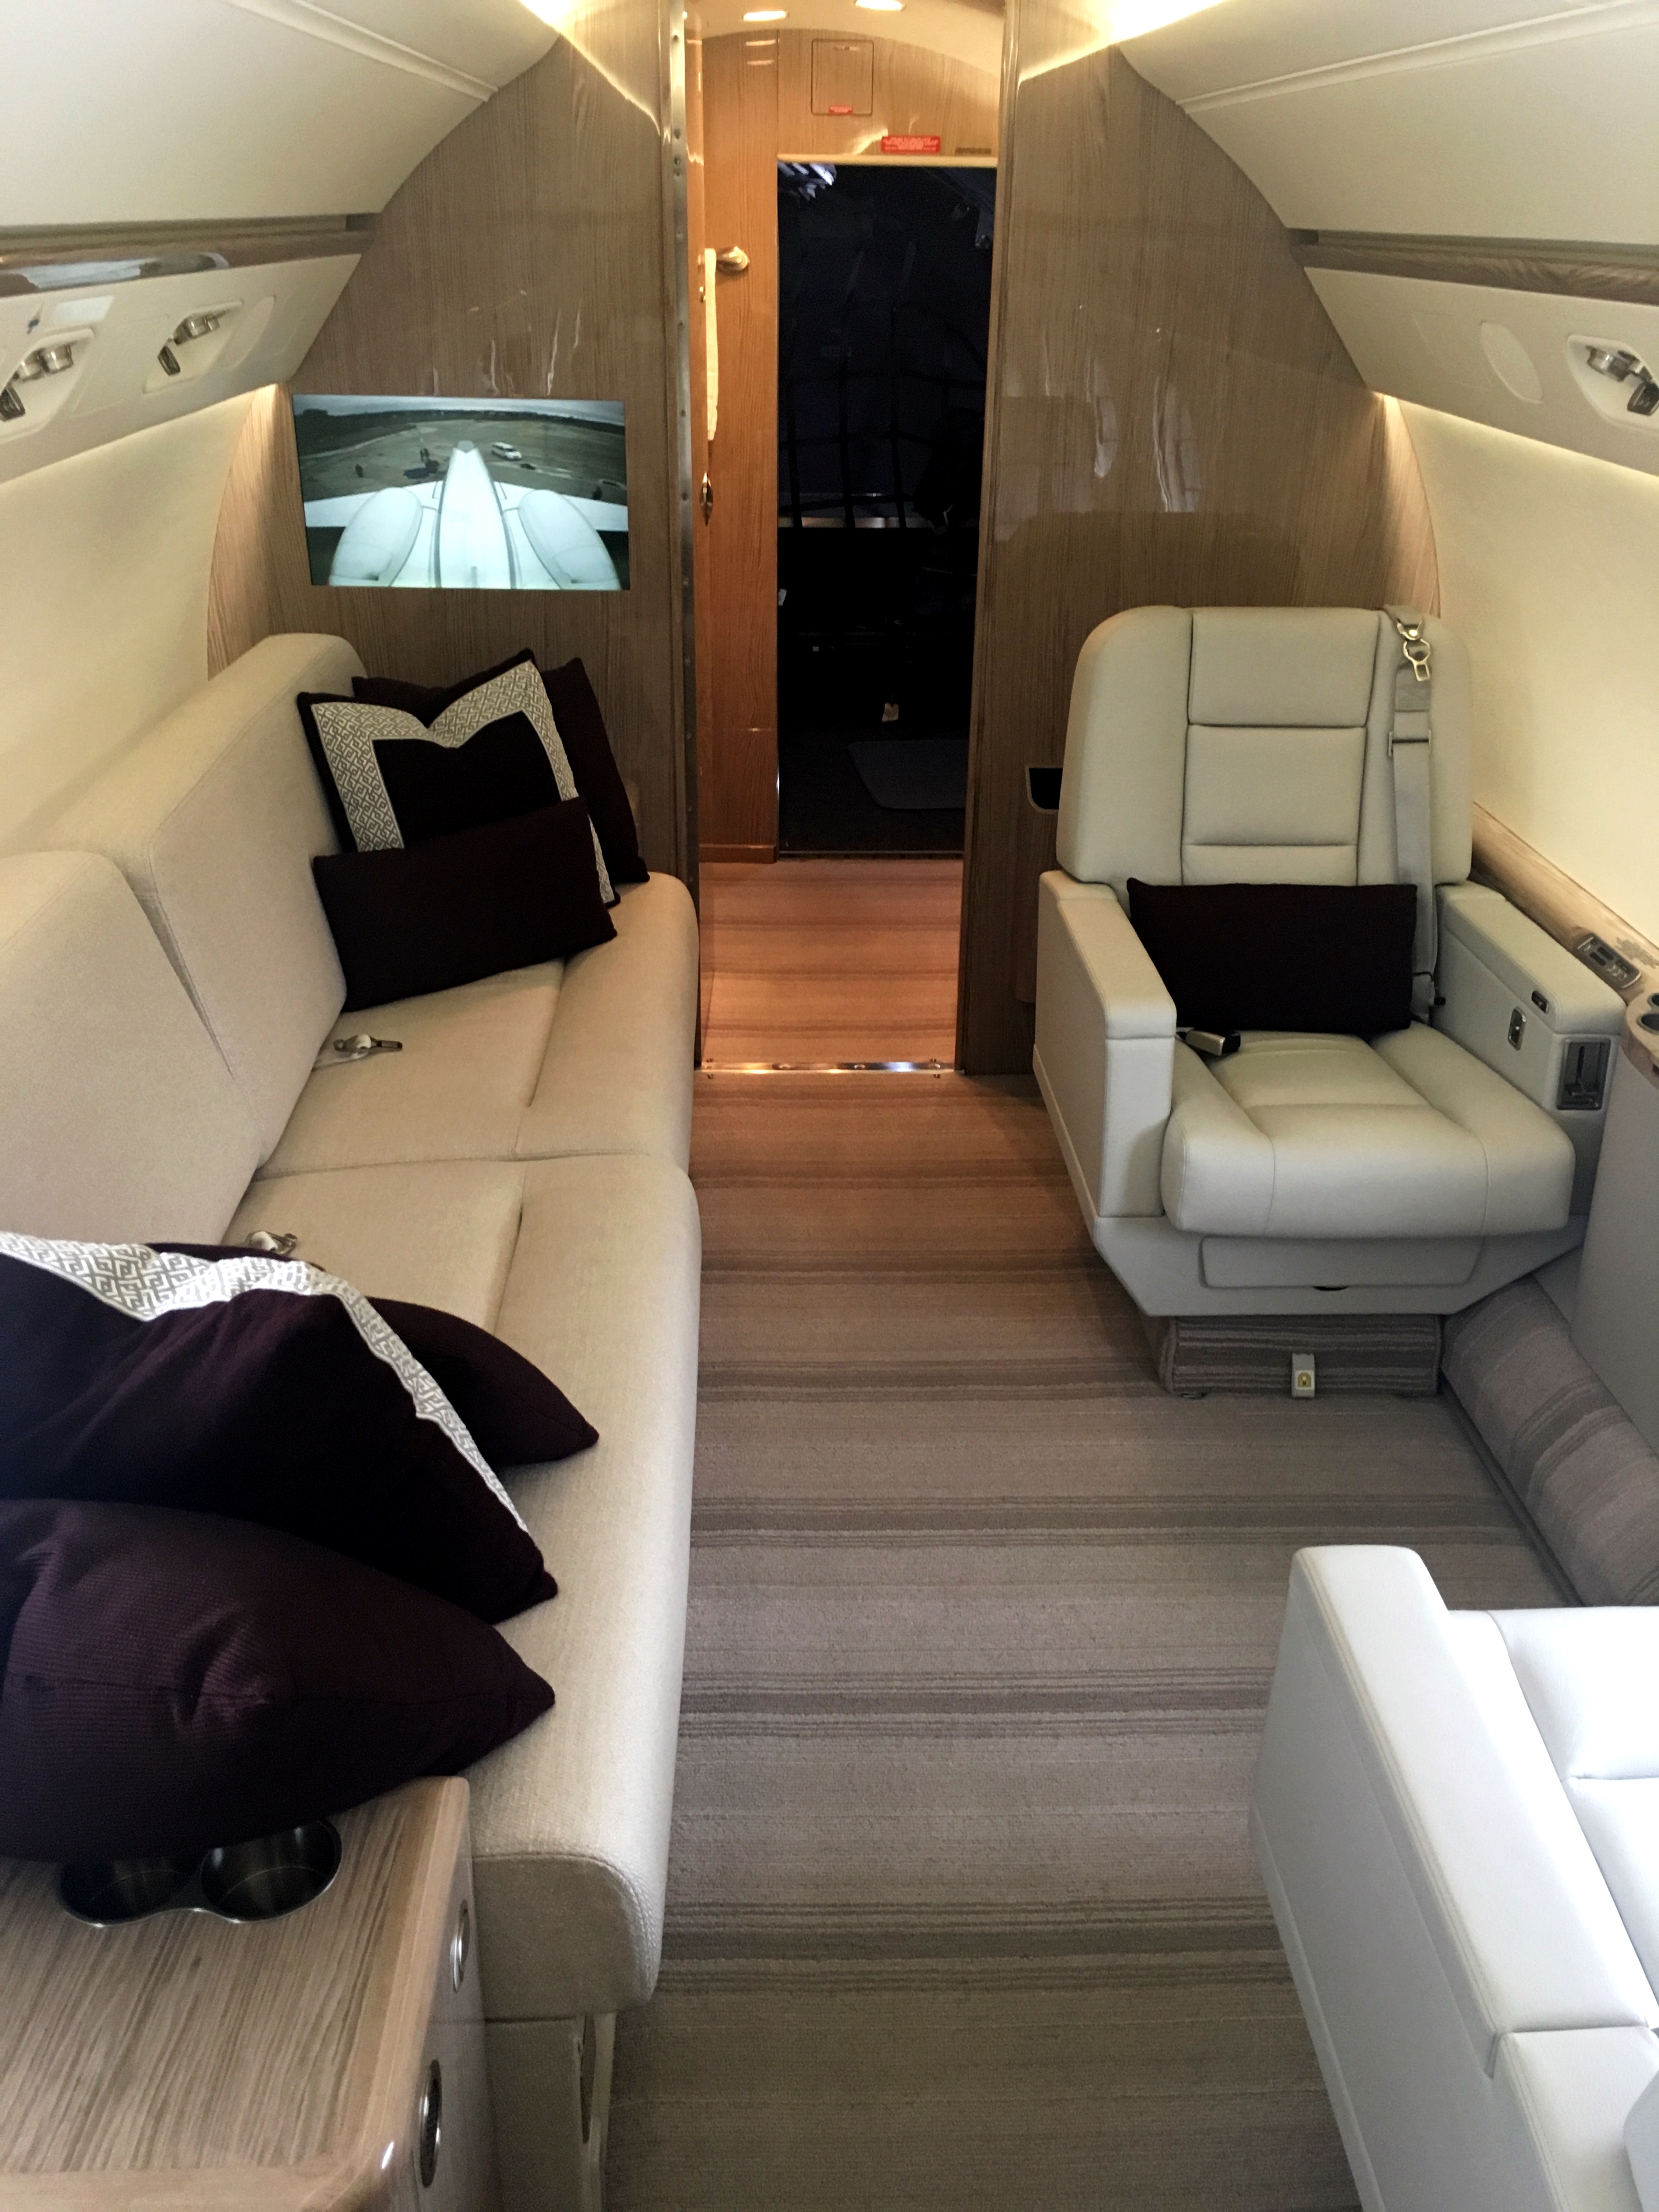 Gulfstream g550 interior